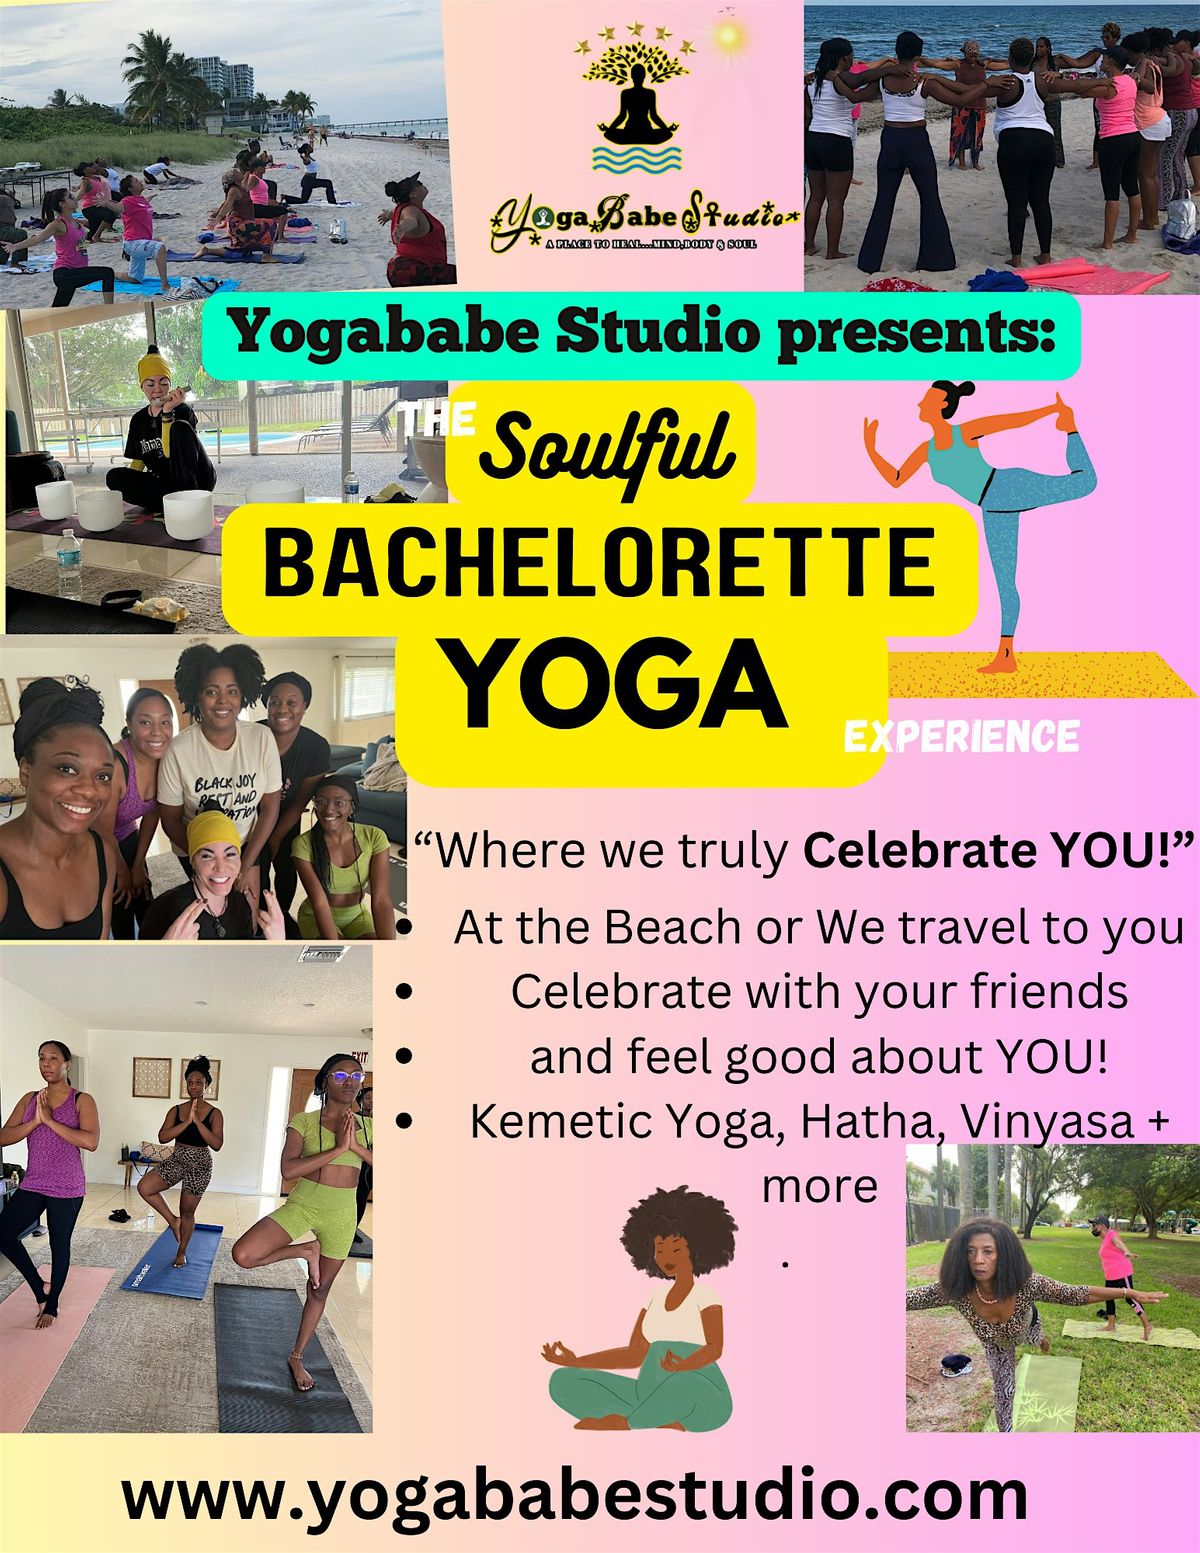 The Soulful Bachelorette Yoga Experience